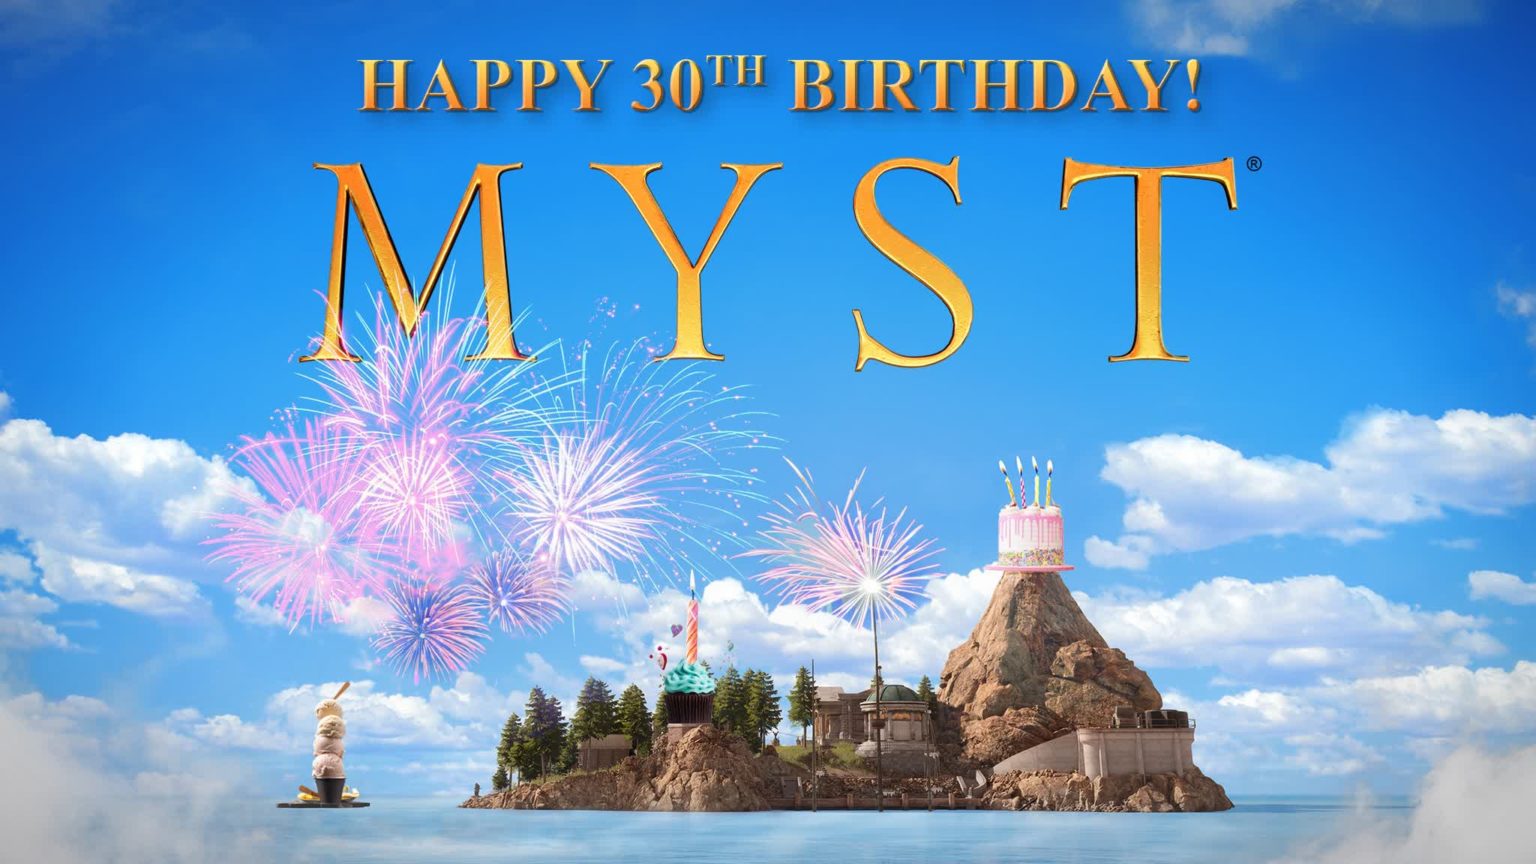 Myst turns 30, do you feel old yet?